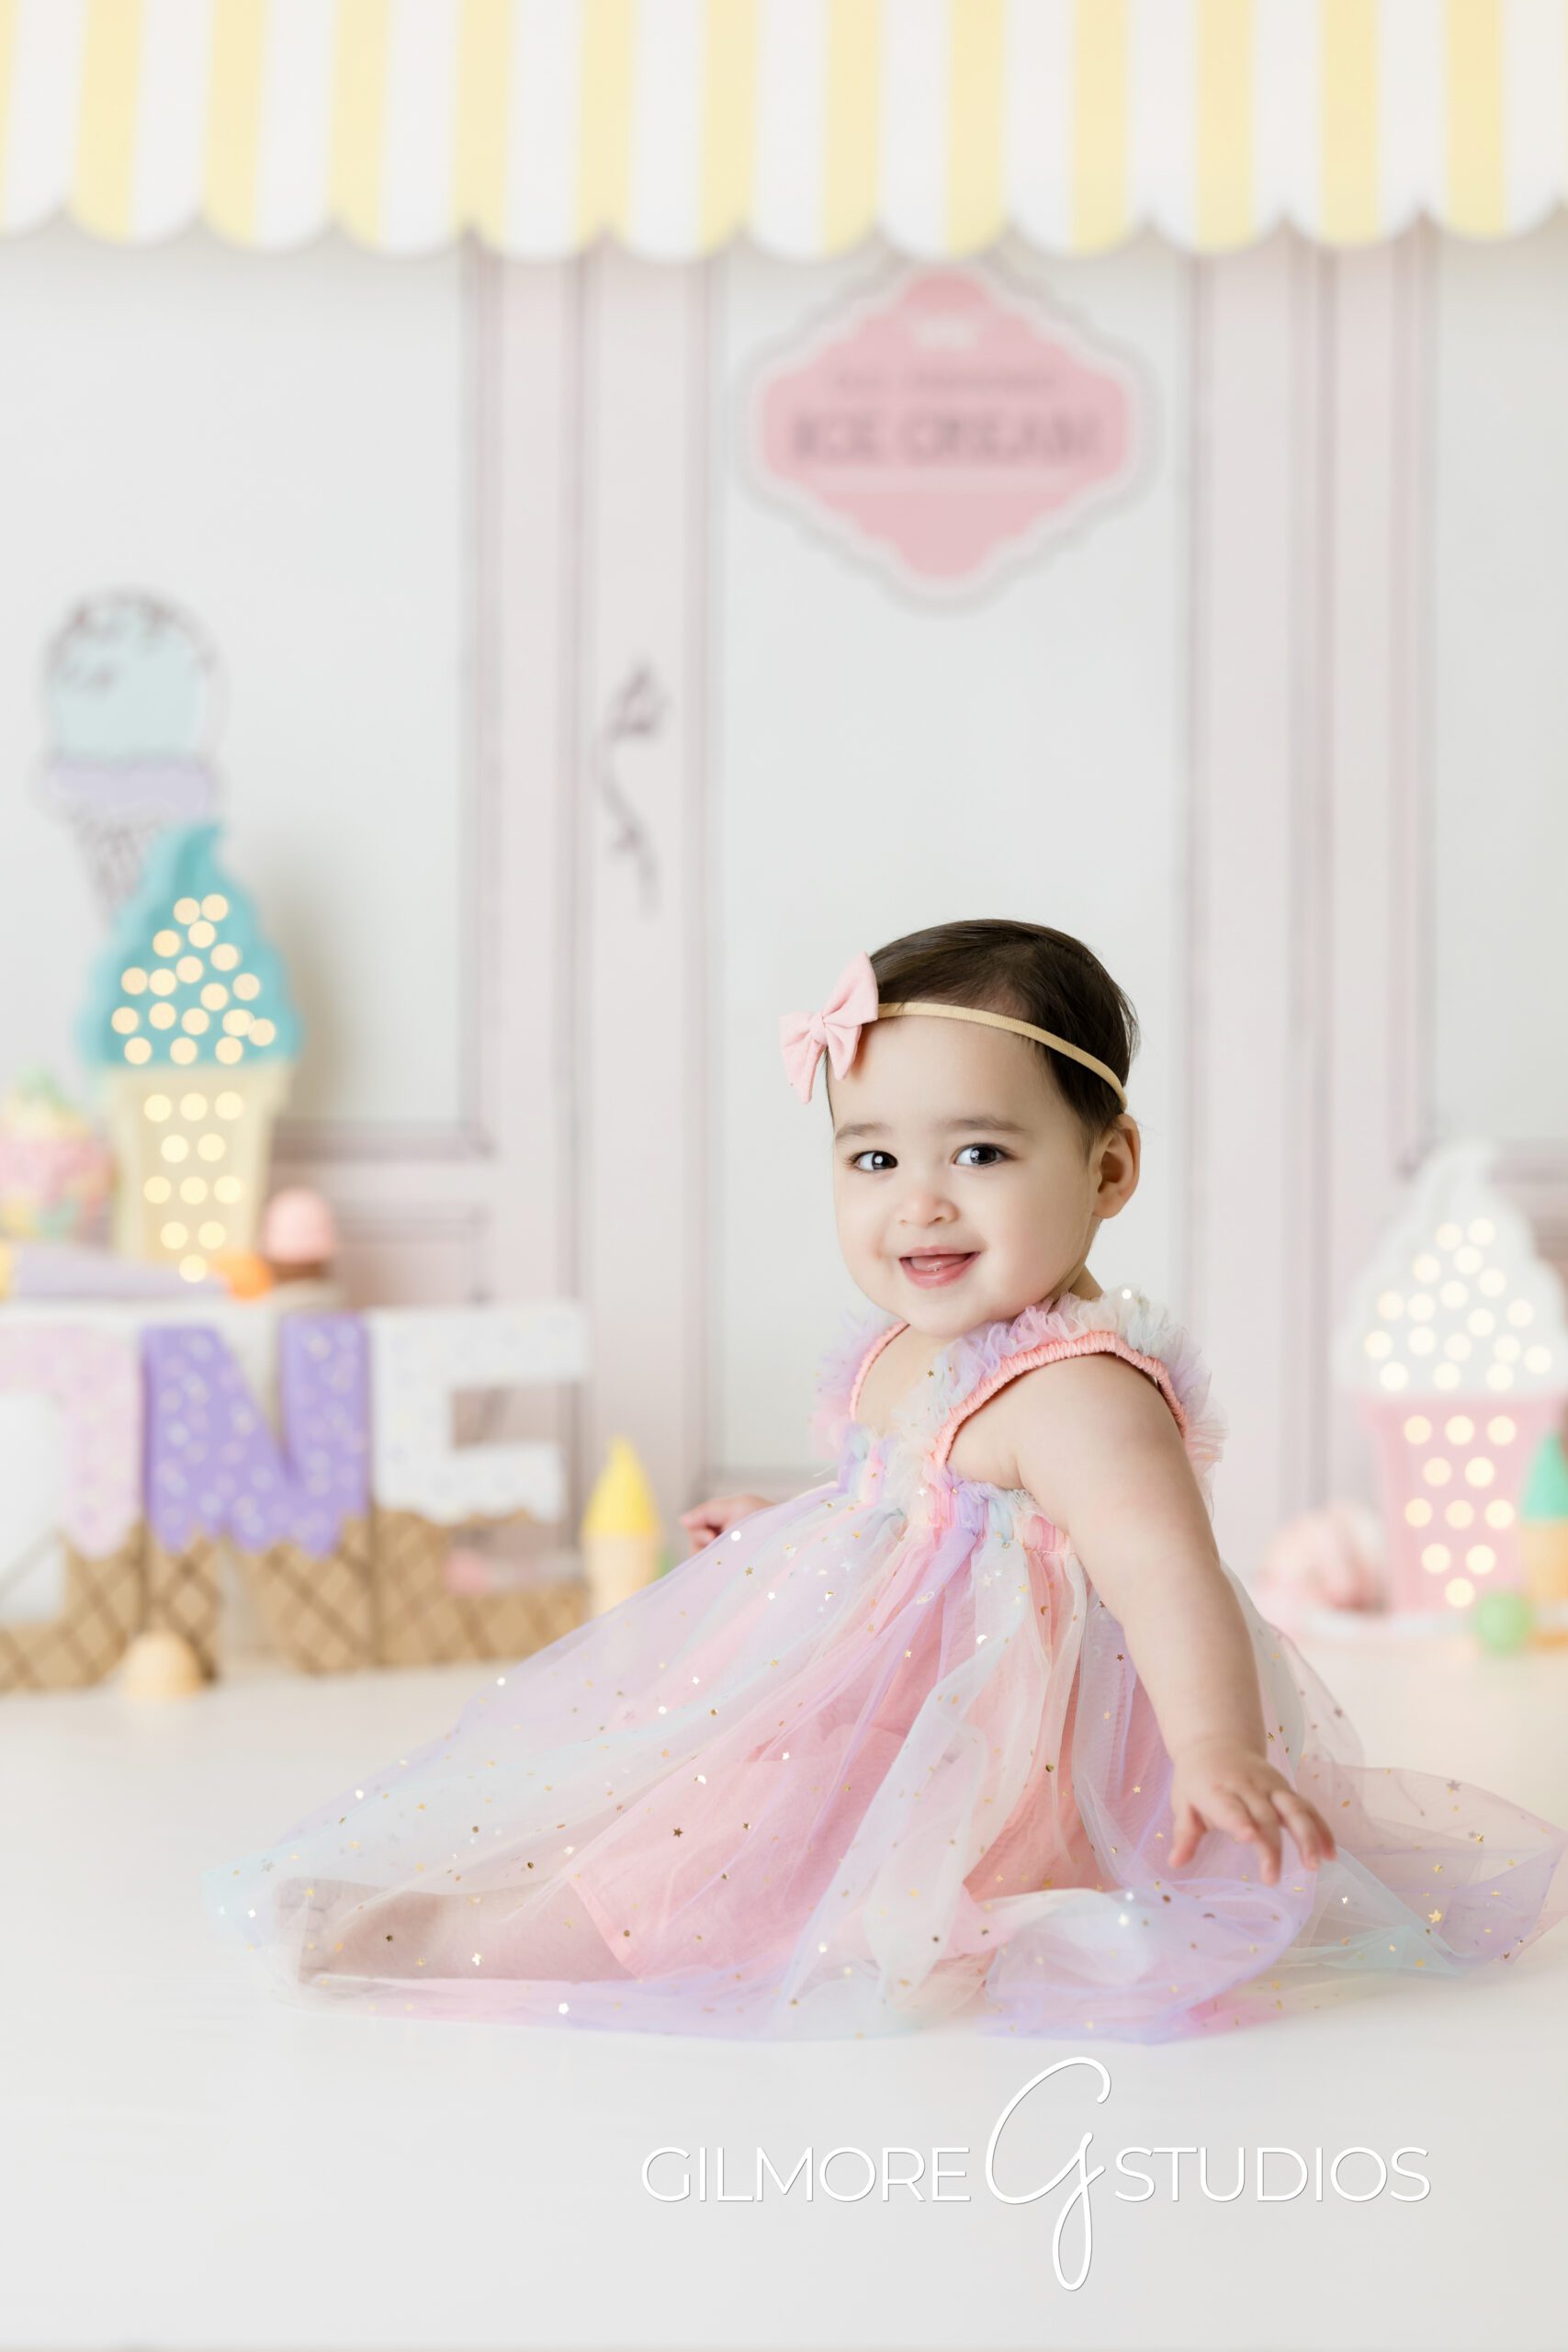 ice cream themed cake Smash, little girl, little girl wearing pink dress, pink bow, posing, photography, Gilmore Studios